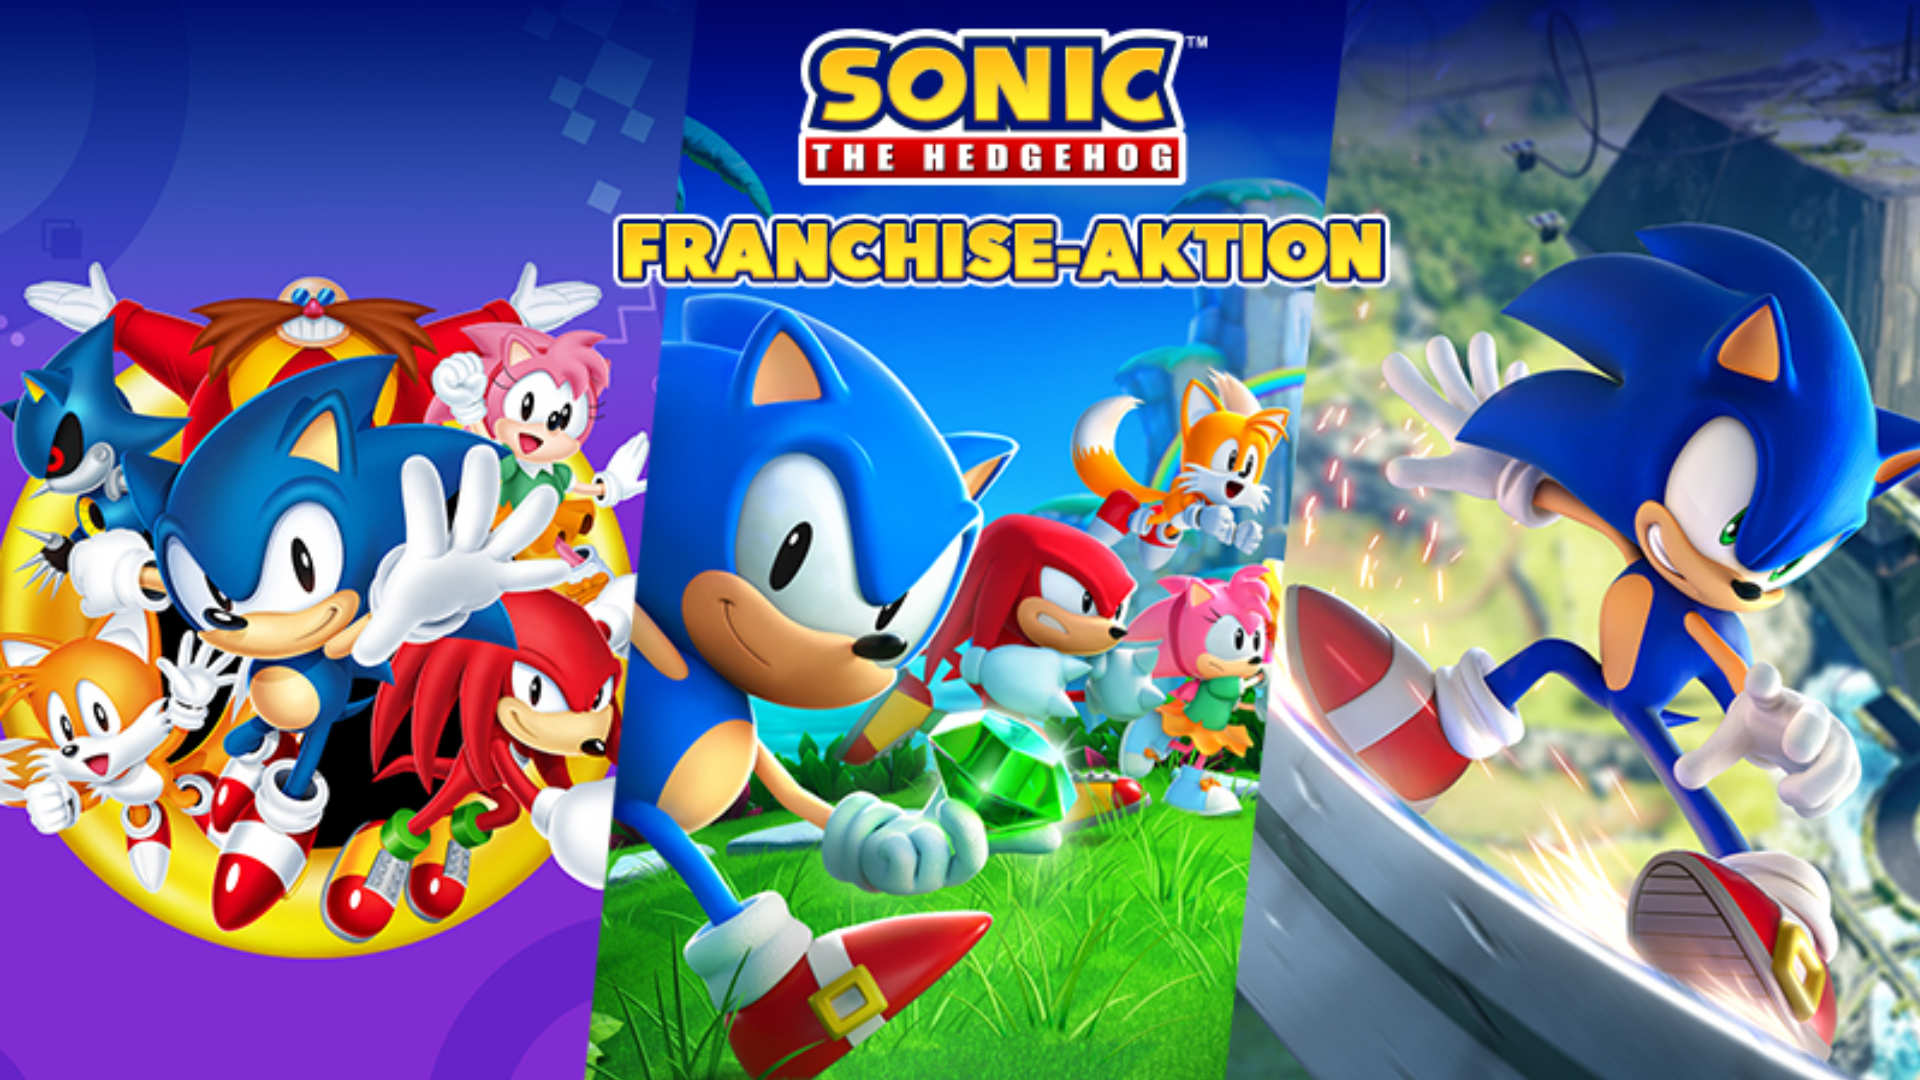 Sonic The Hedgehog: Satte Rabatte für den Rennigel im Steam Franchise-Sale